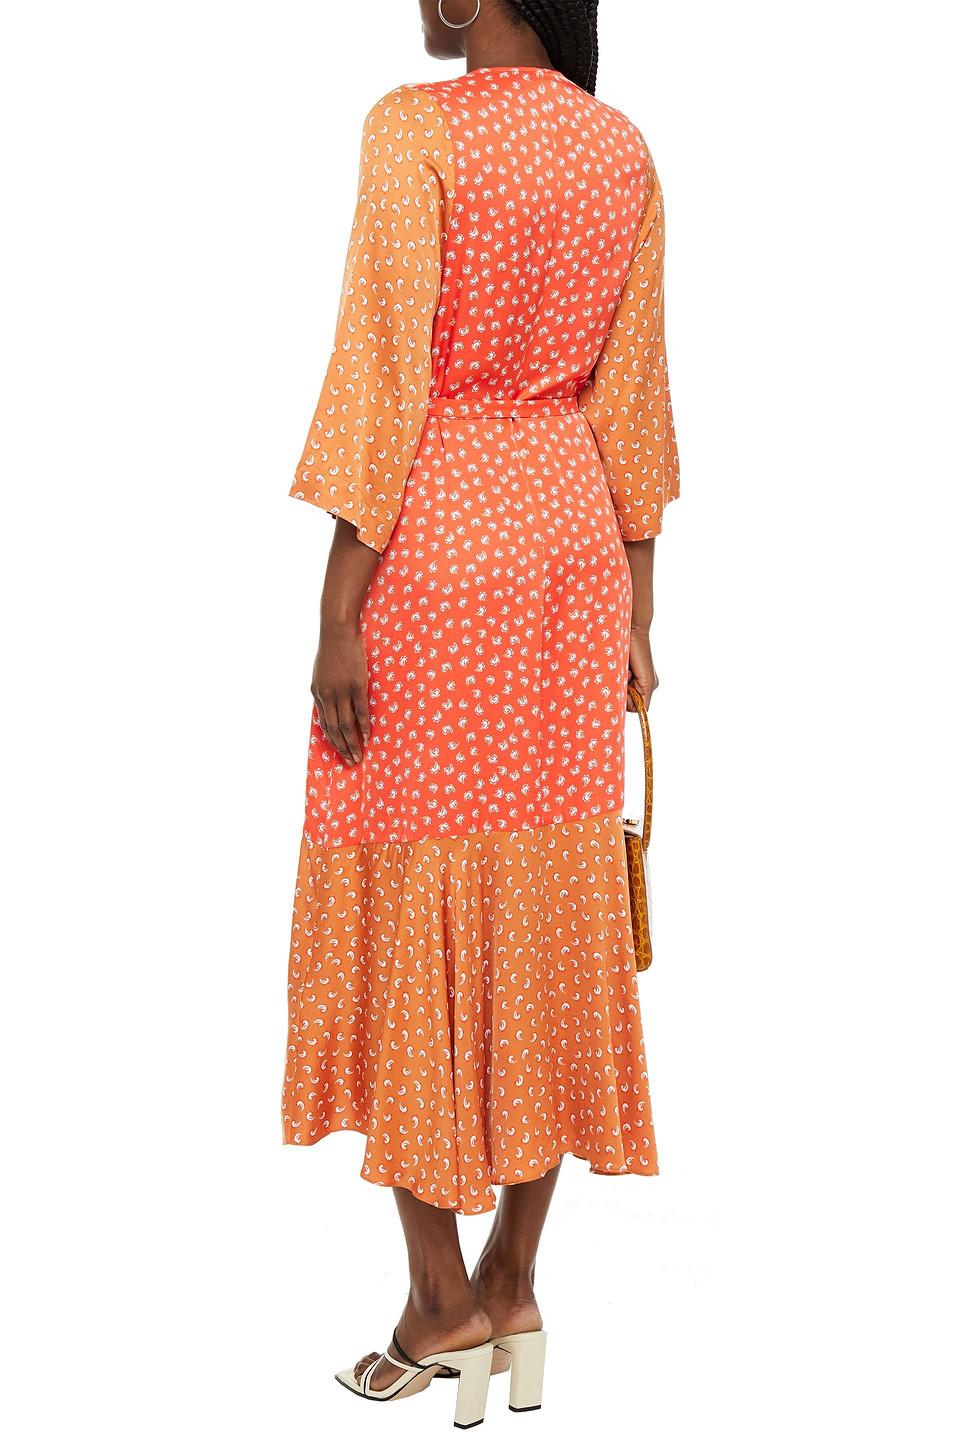 Rodebjer Millie Paneled Printed Satin Midi Wrap Dress in Orange - Lyst